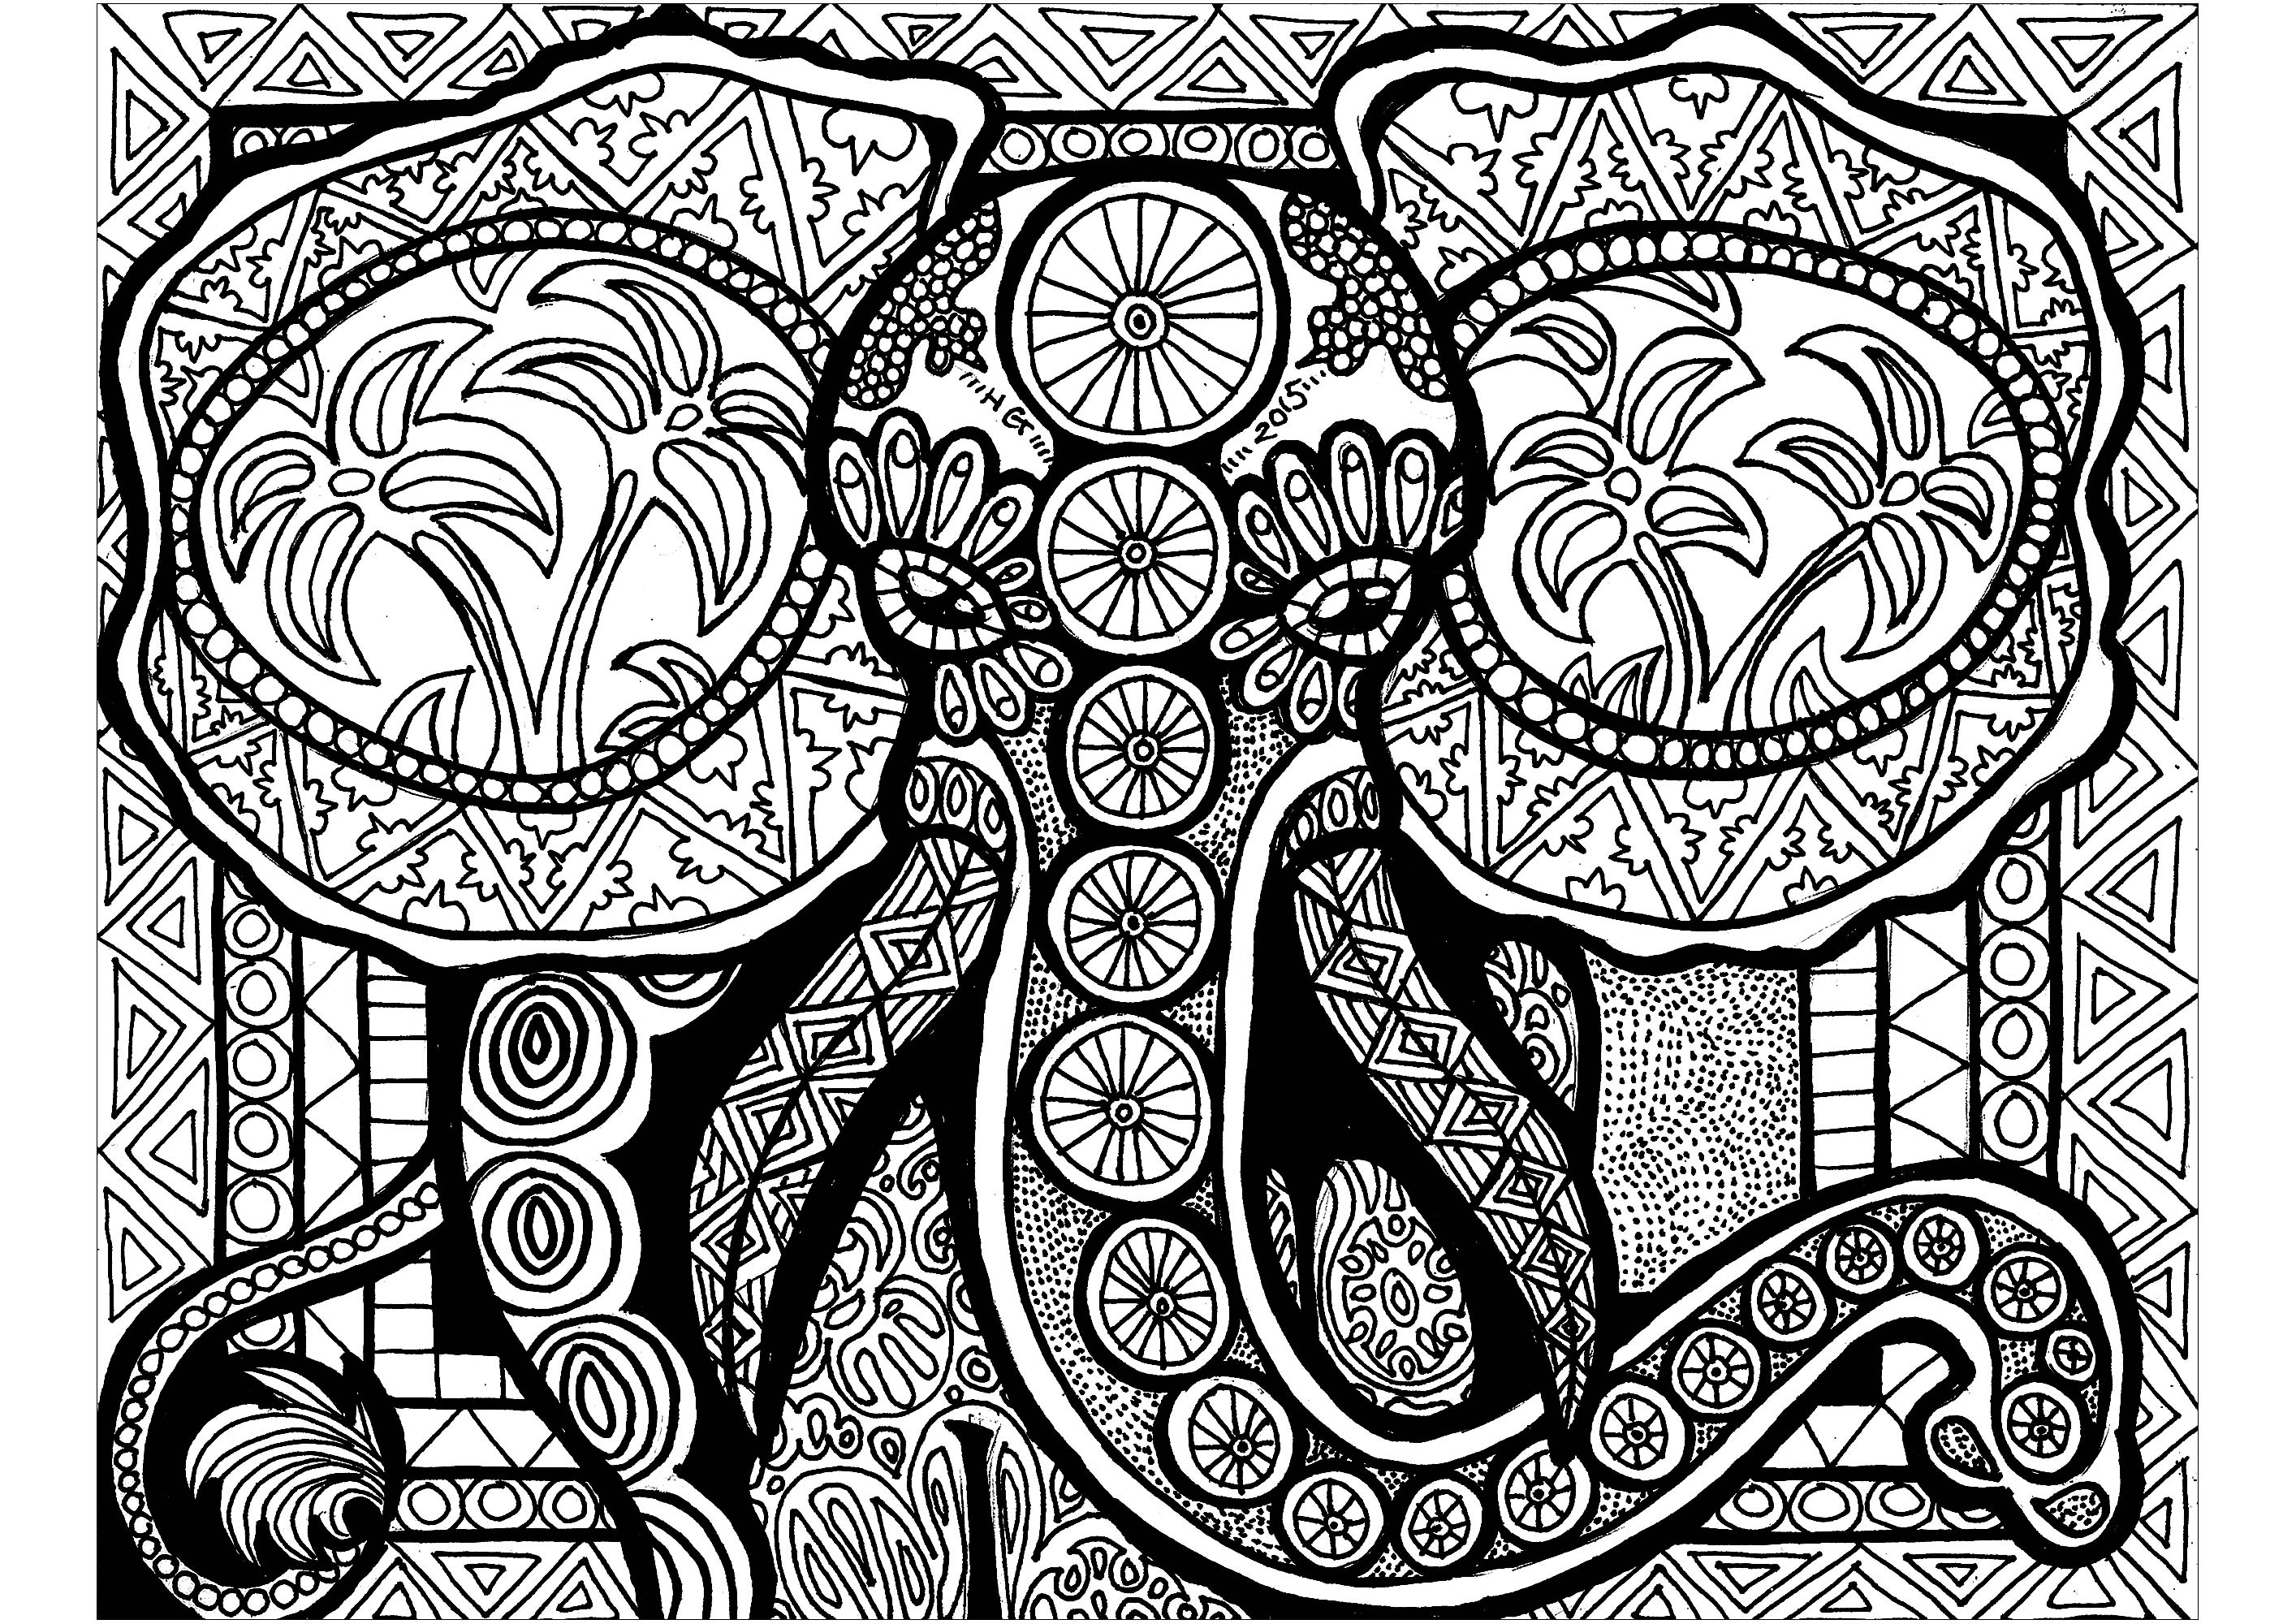 Este majestoso elefante Zentangle só precisa de algumas cores!